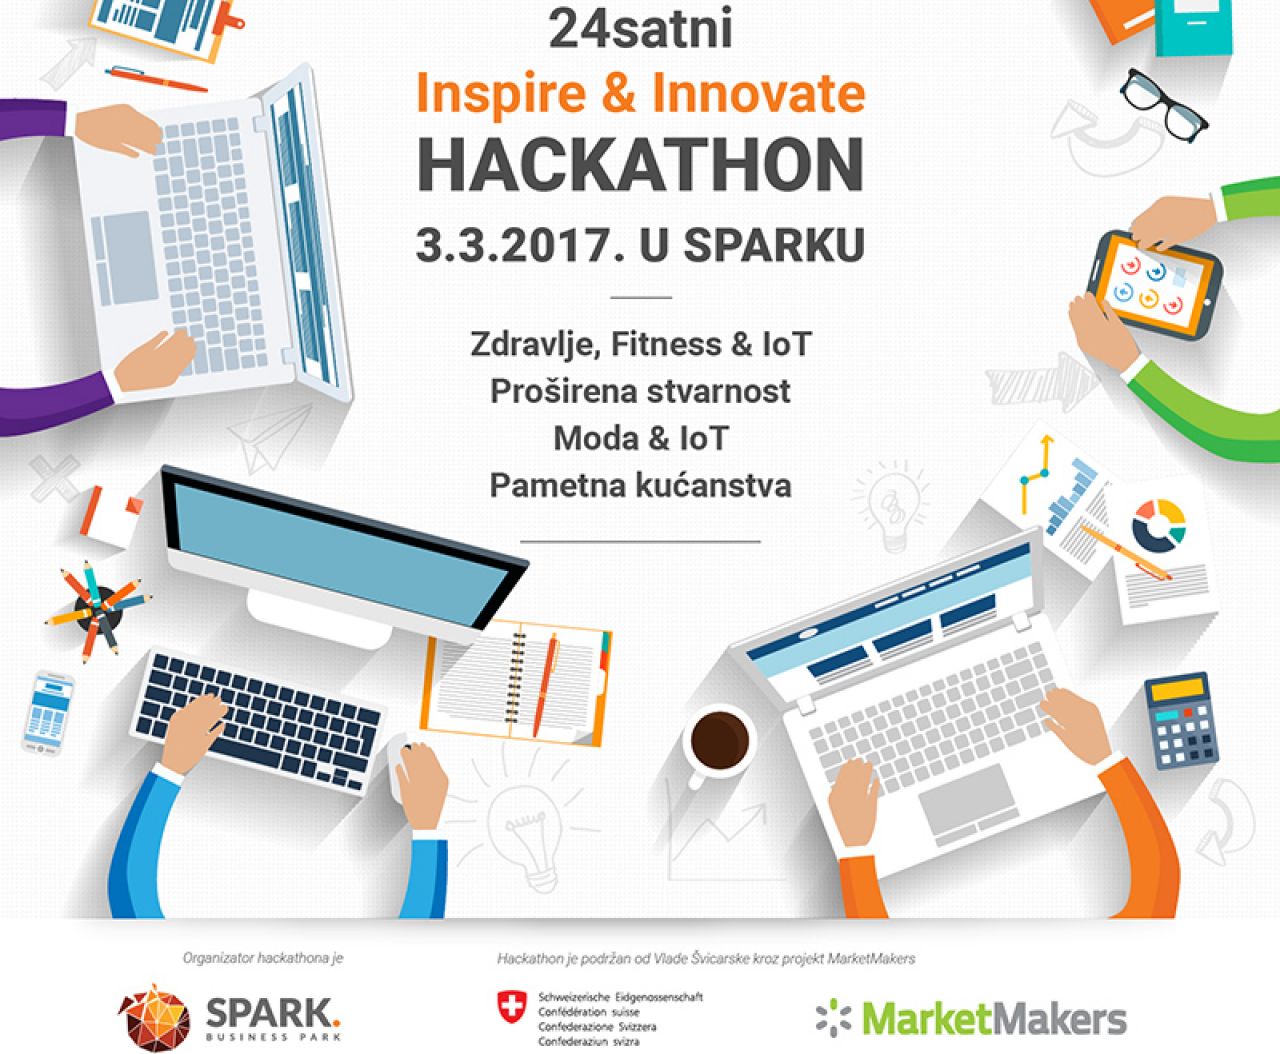 Budi dio prvog Inspire & Innovate Hackathona i osvoji odlične nagrade